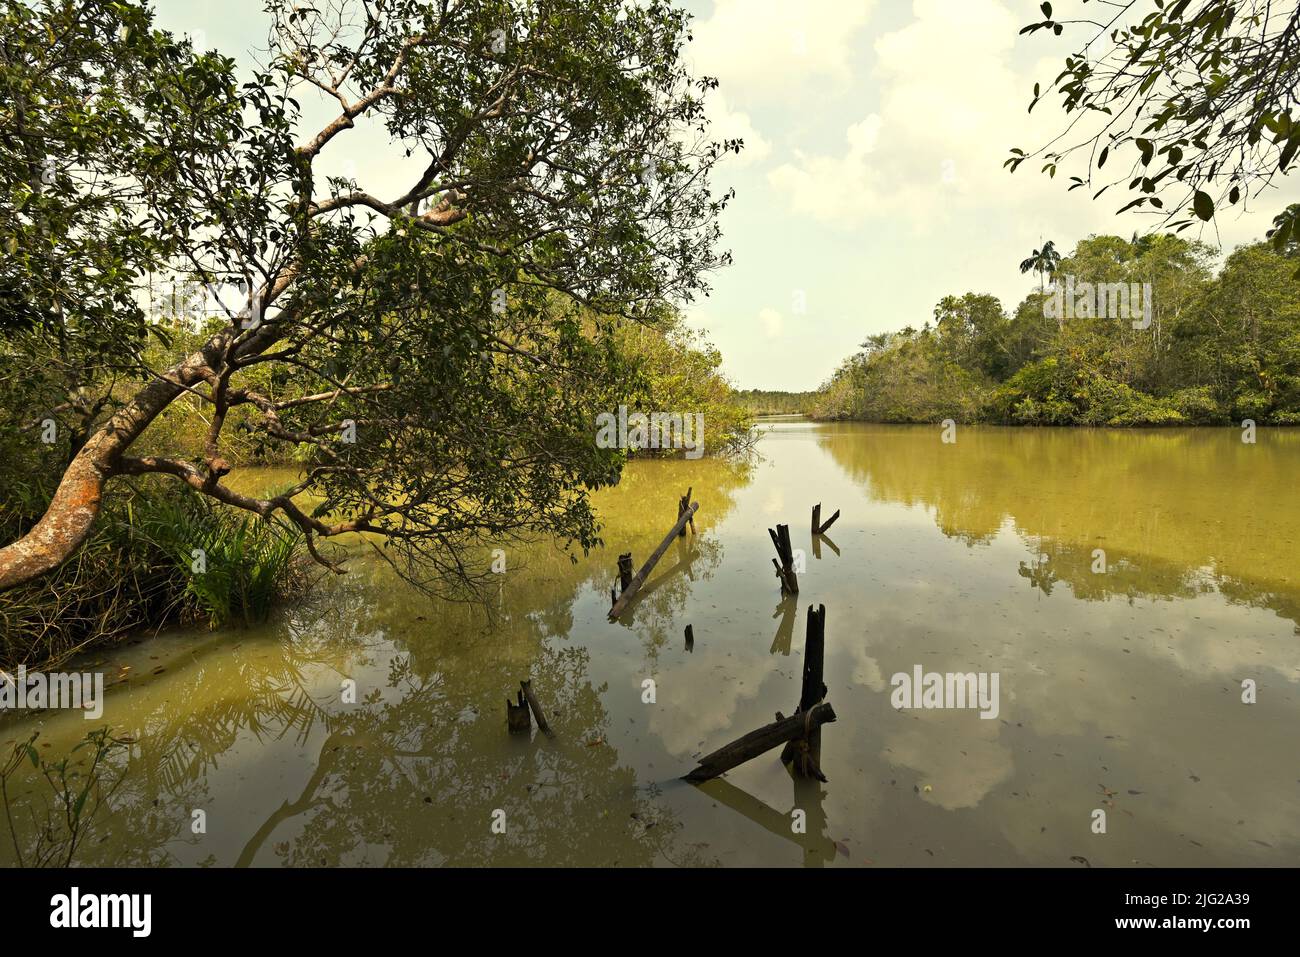 Way Kanan river in Way Kambas National Park, Lampung, Indonesia. Stock Photo